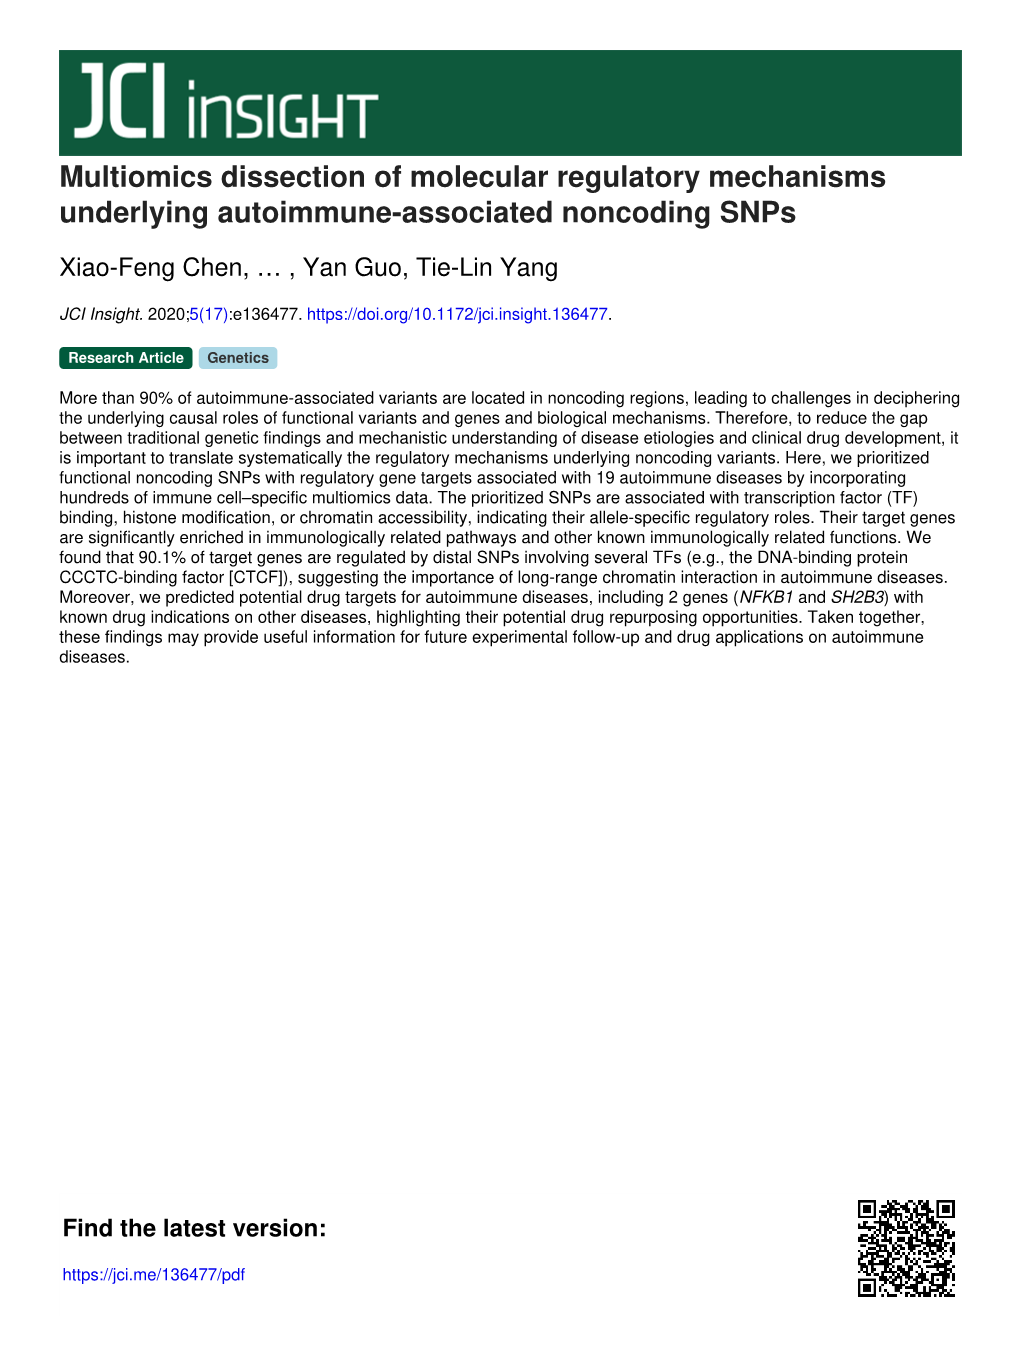 Multiomics Dissection of Molecular Regulatory Mechanisms Underlying Autoimmune-Associated Noncoding Snps